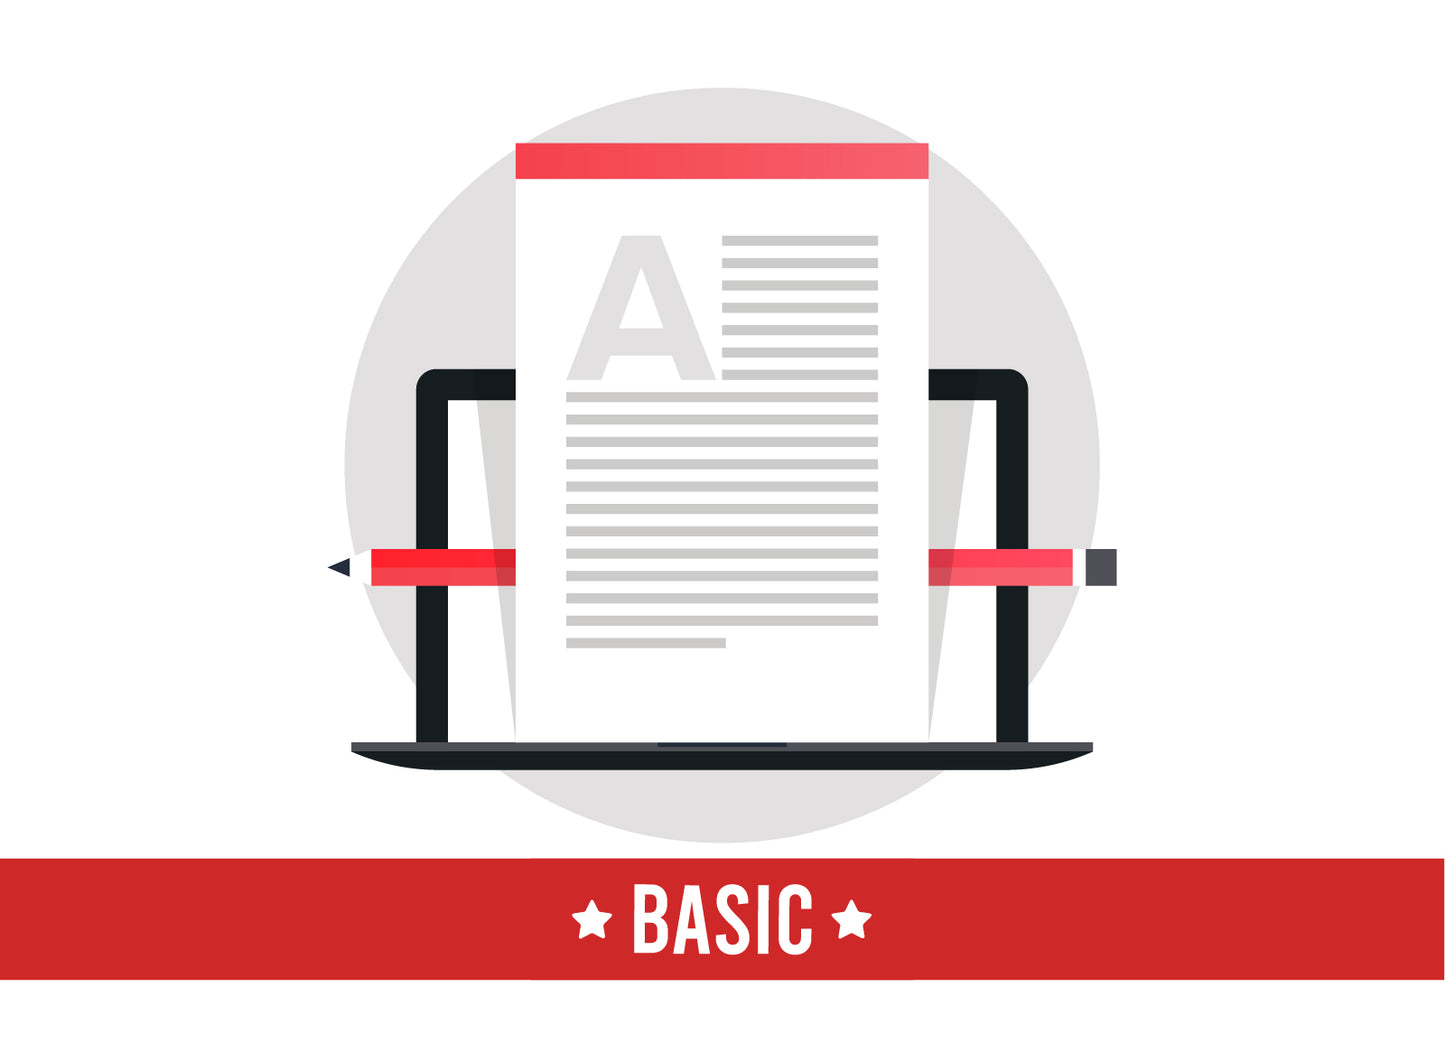 Content Writing - Basic